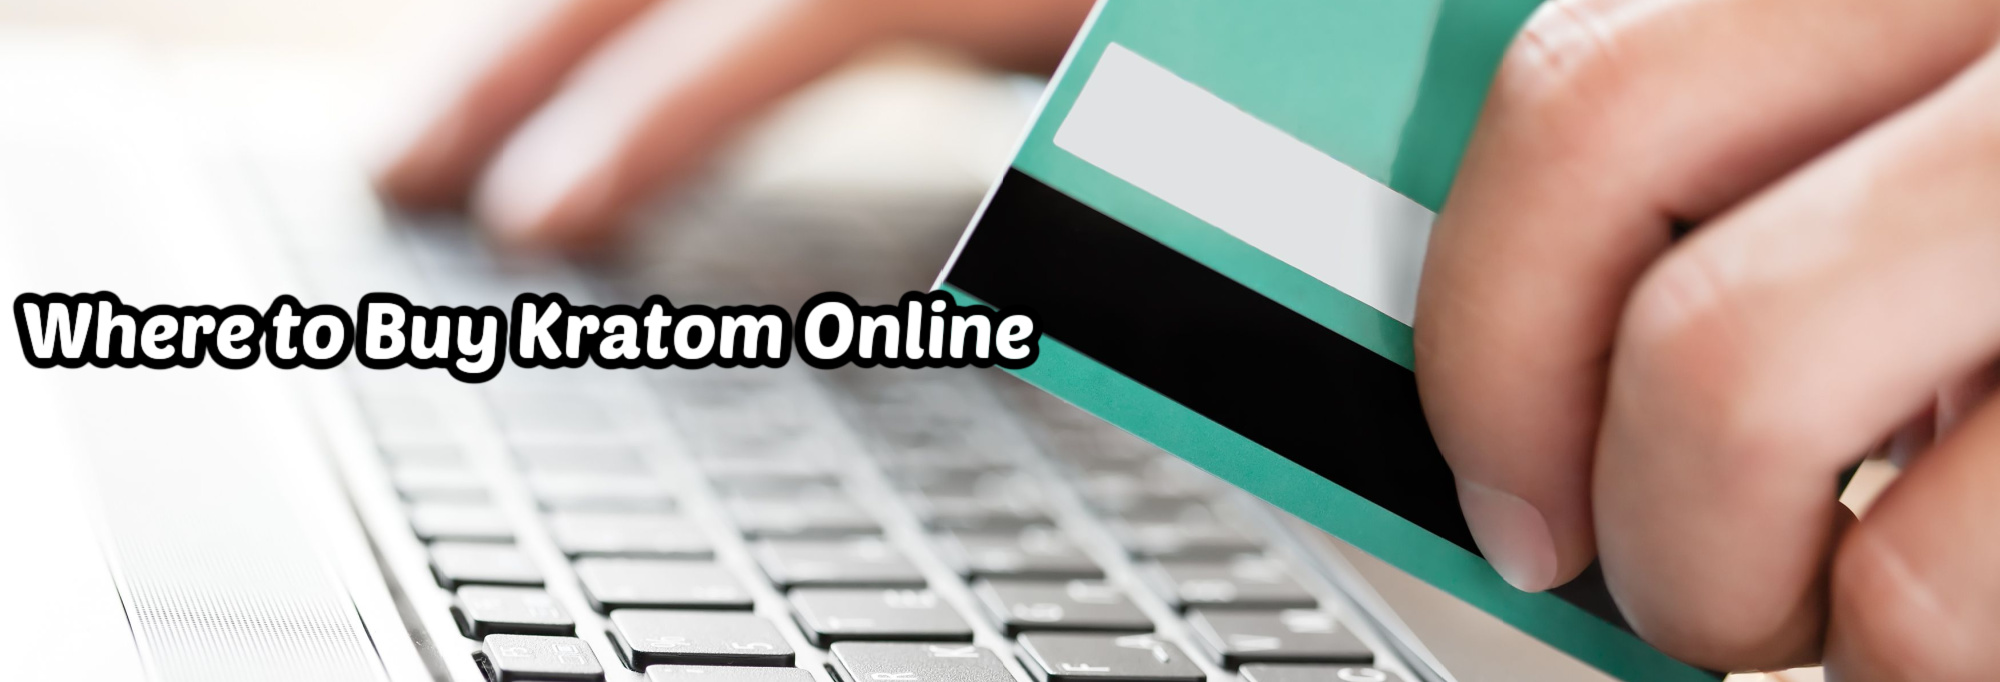 image of where to buy kratom online